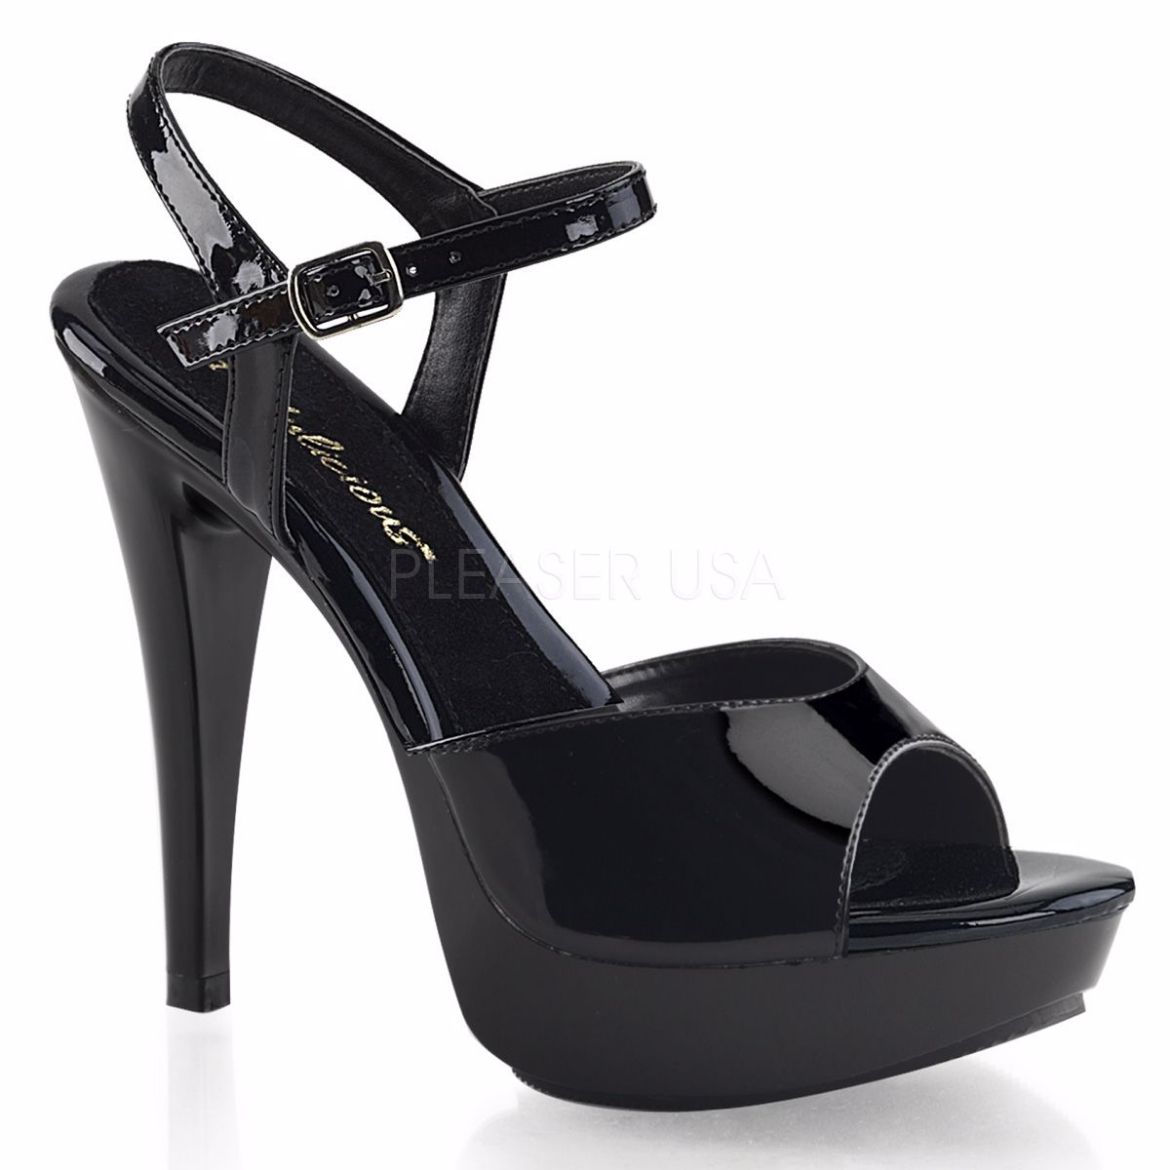 Product image of Fabulicious Cocktail-509 Black/Black, 5 inch (12.7 cm) Heel, 1 inch (2.5 cm) Platform Sandal Shoes